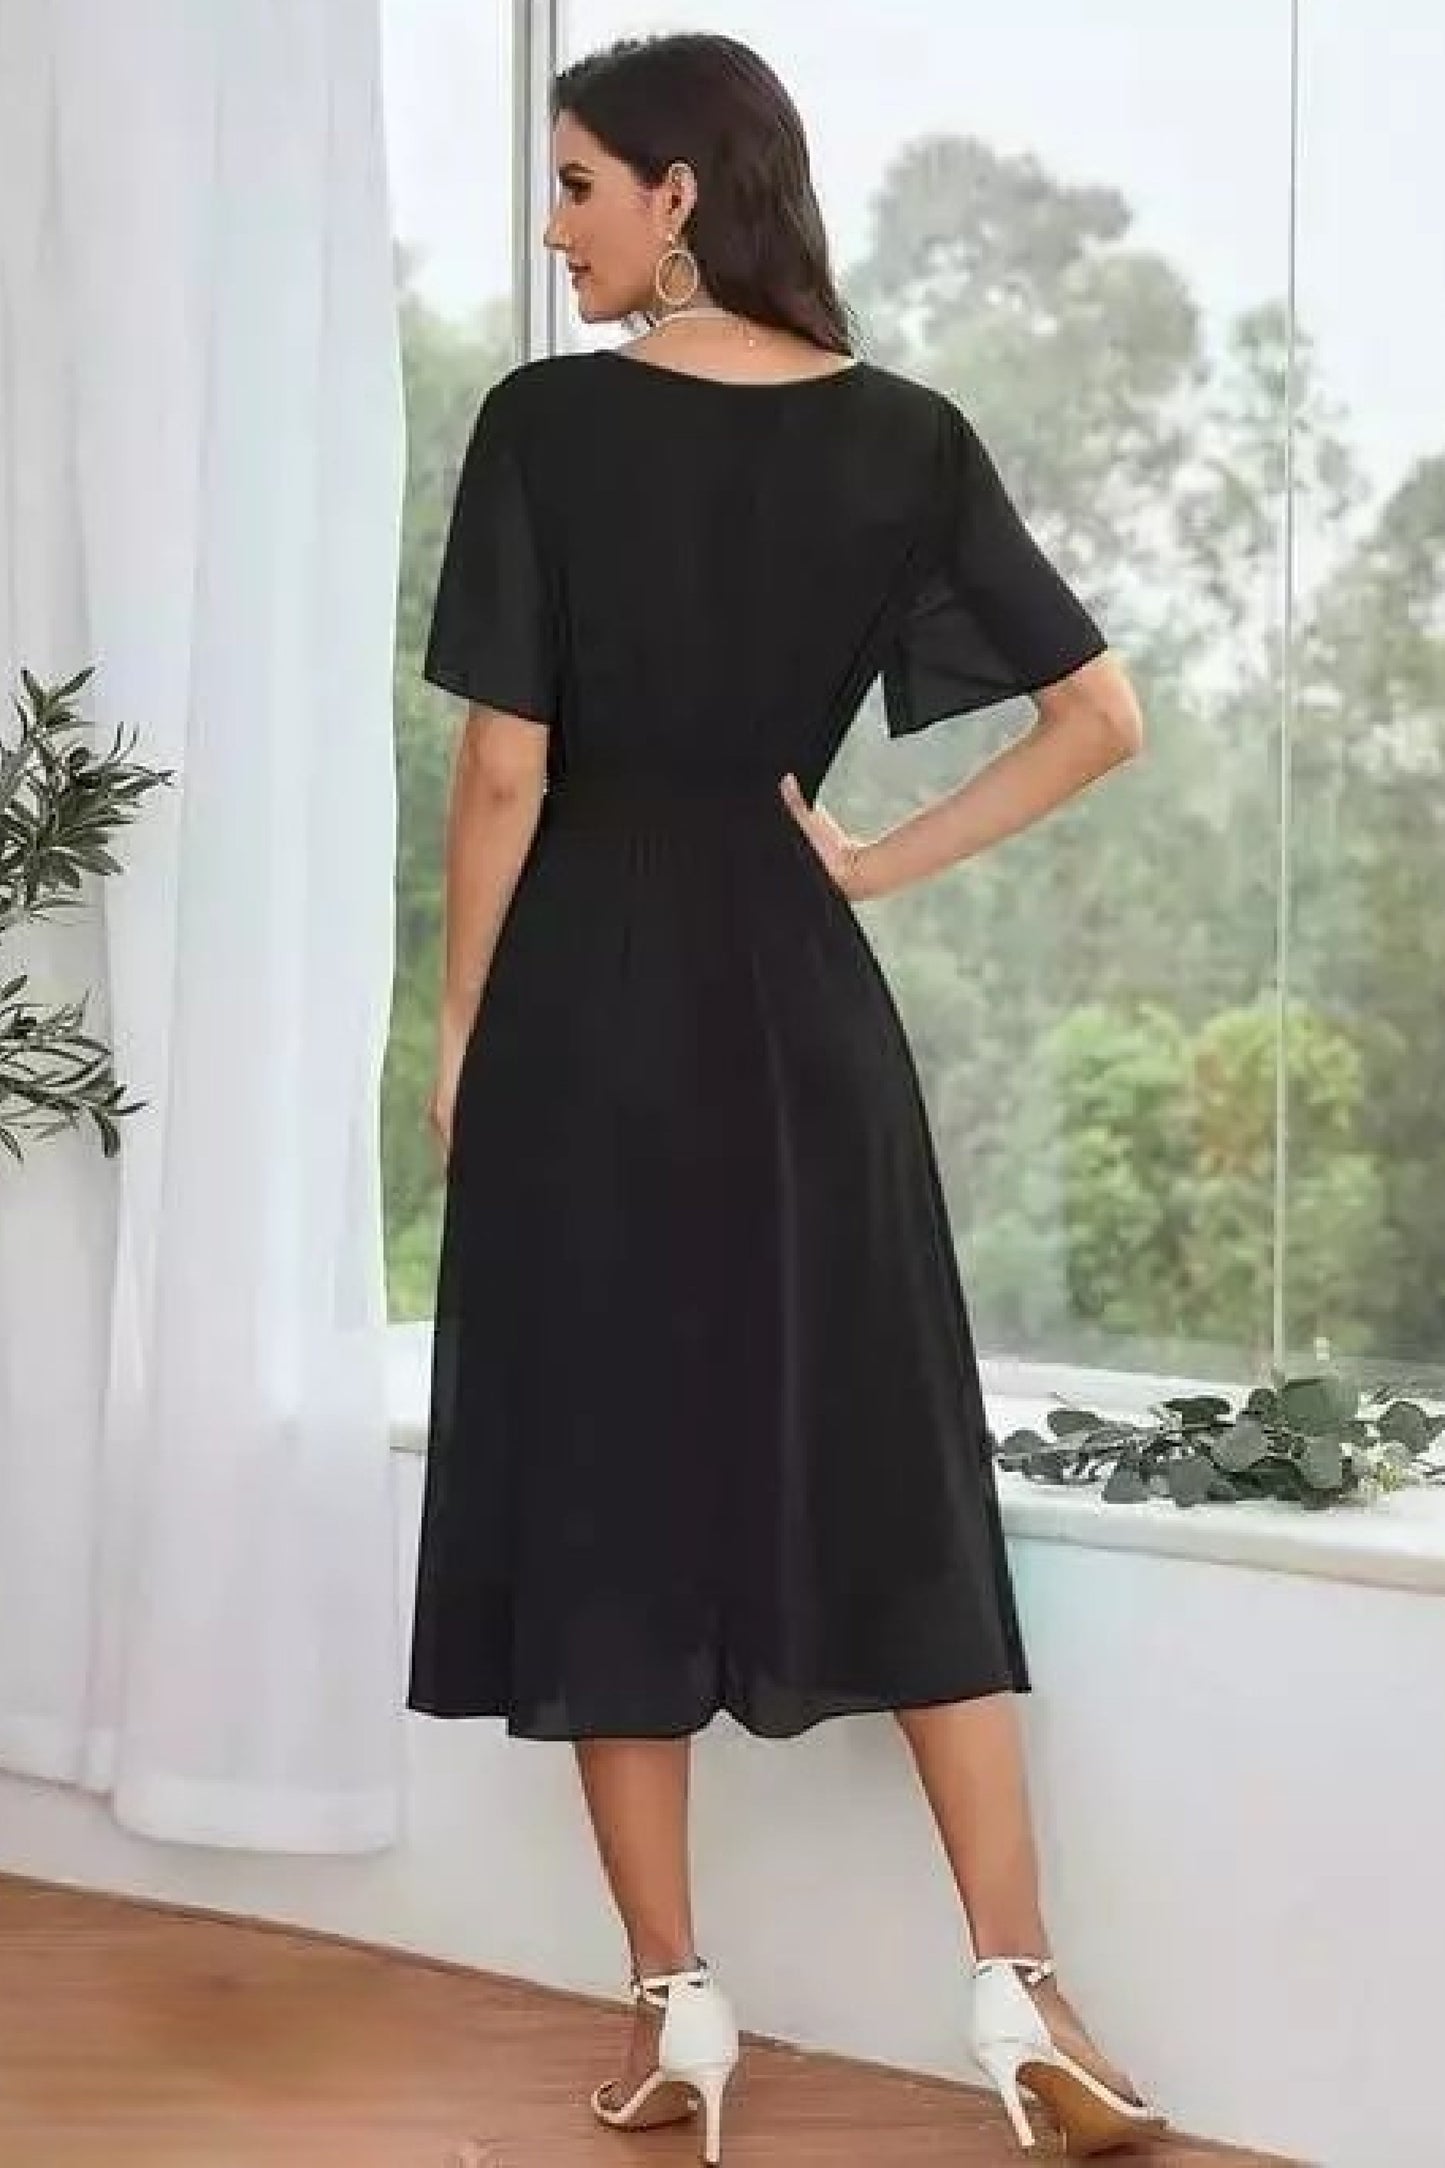 Fashionable Georgette Black Dress